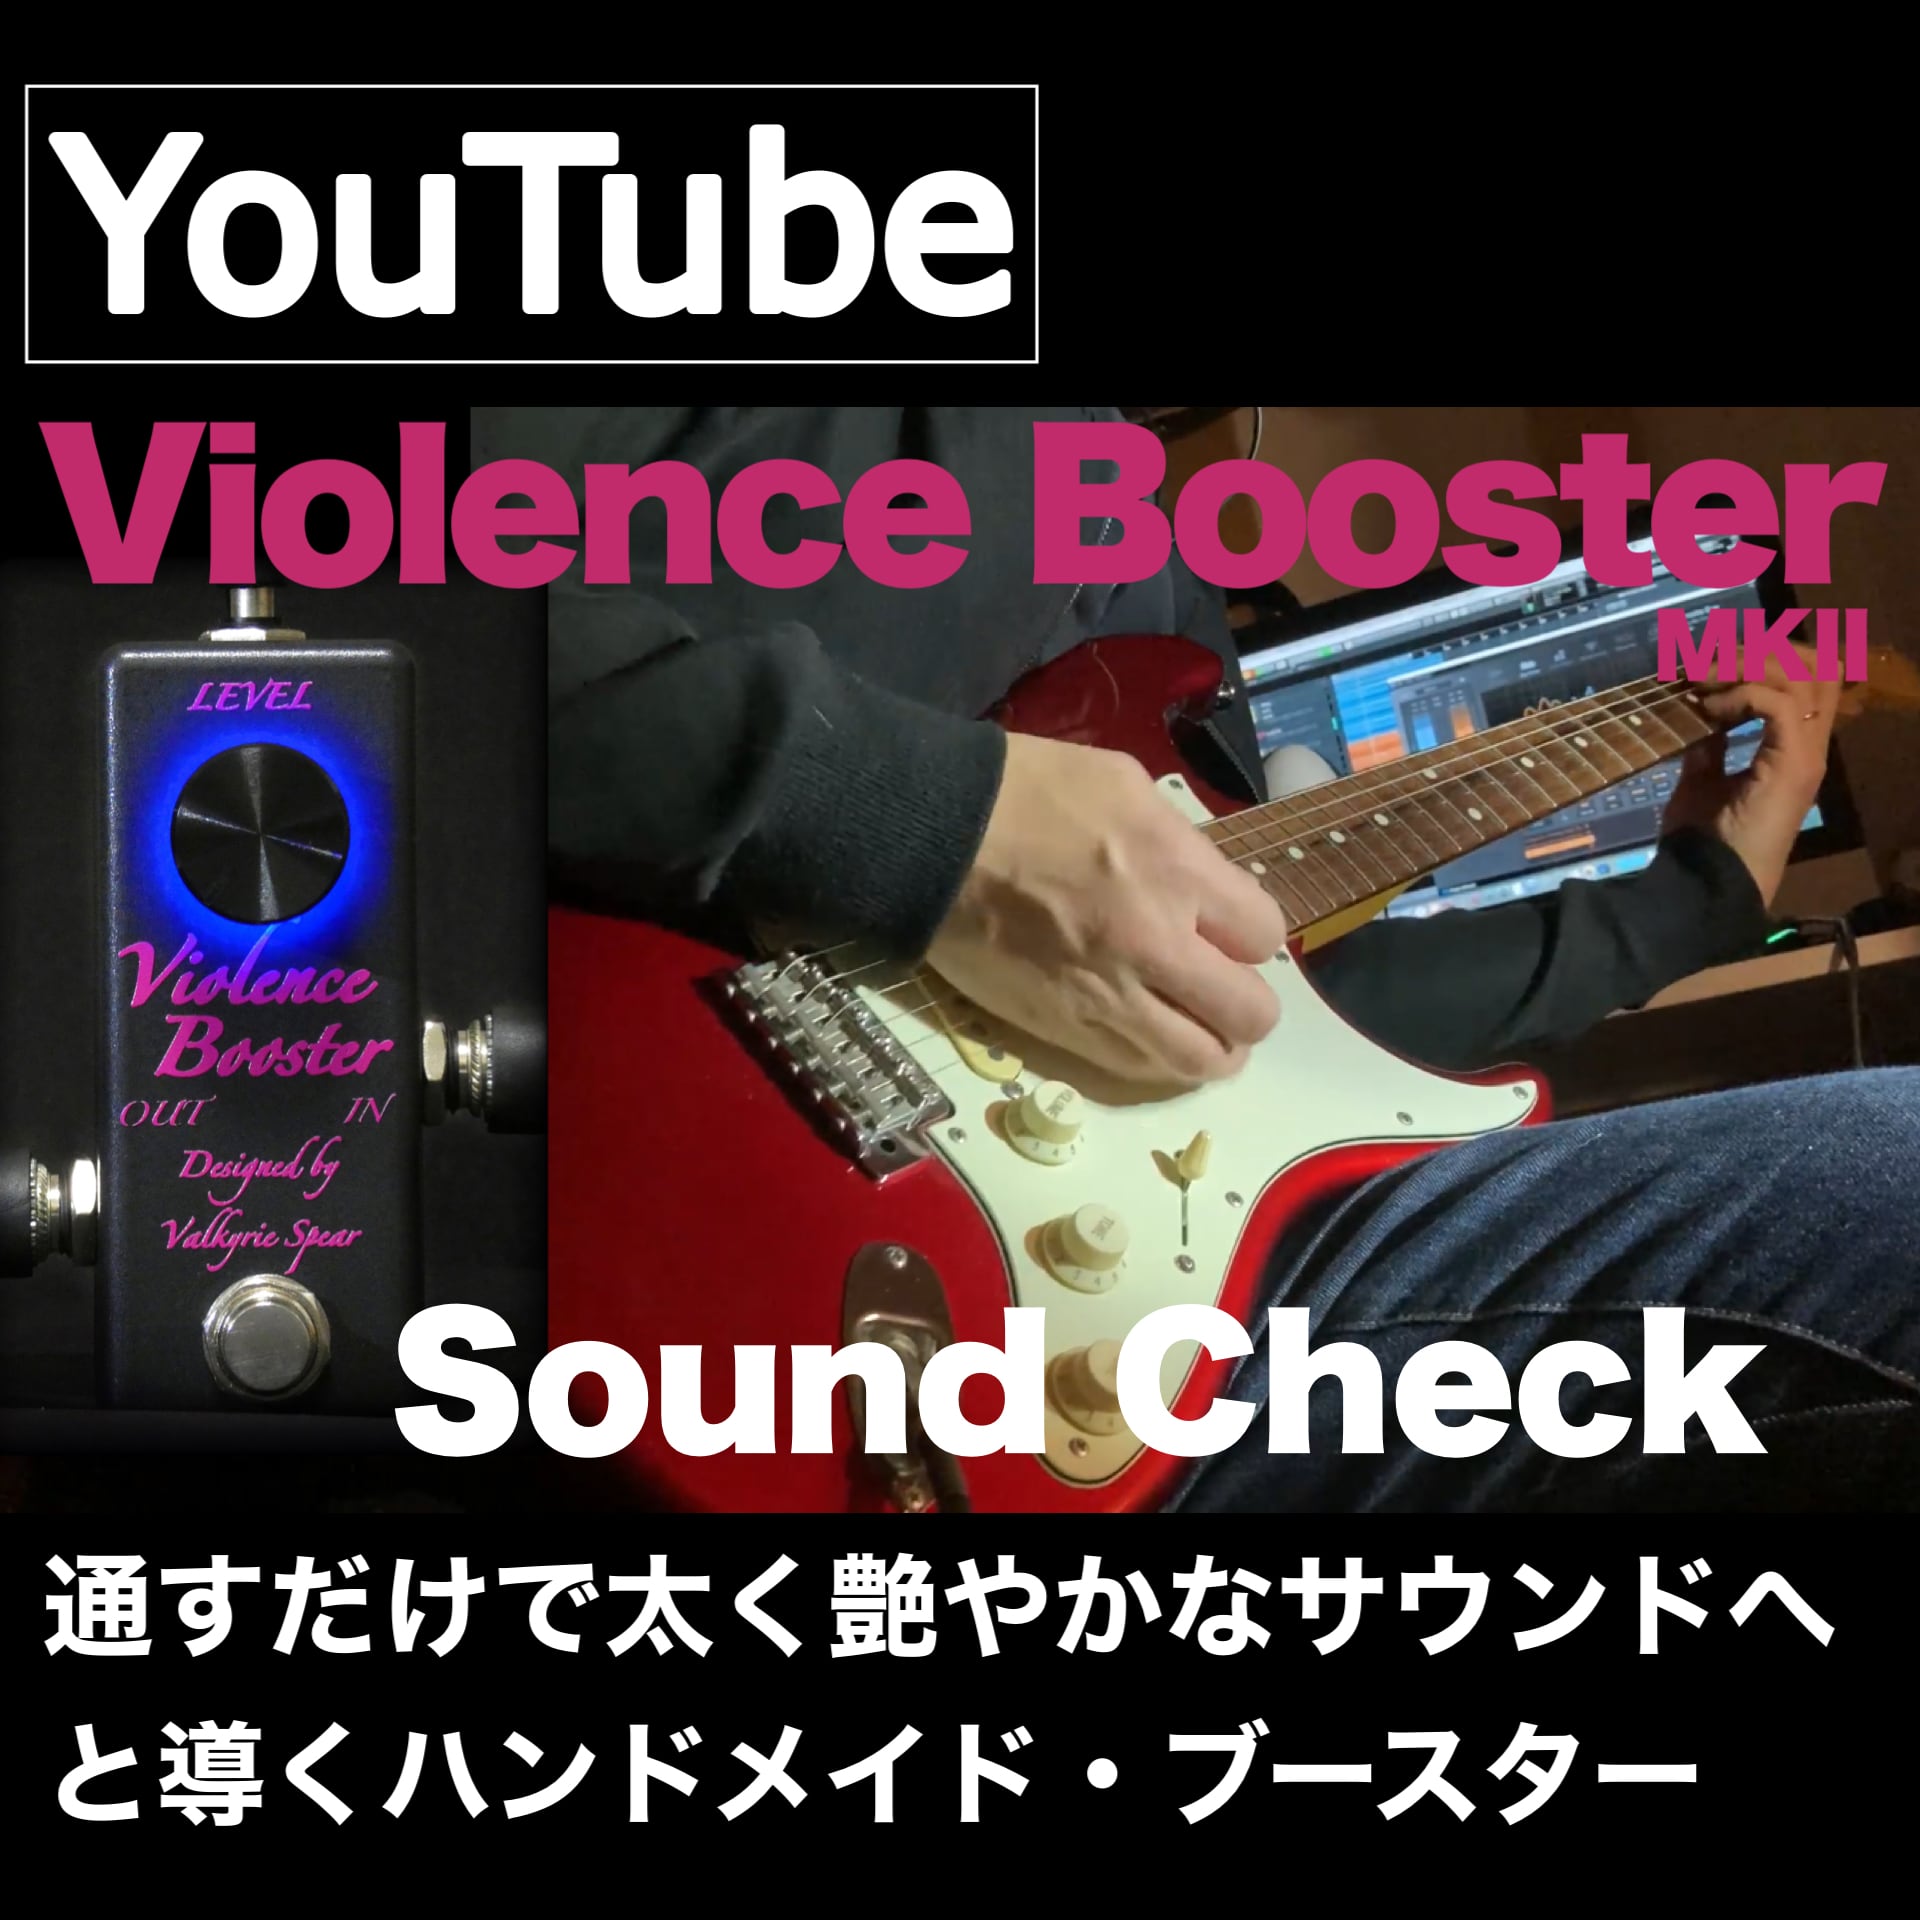 新品純正品 ValkyrieSpear violence booster MK1 - 楽器/器材